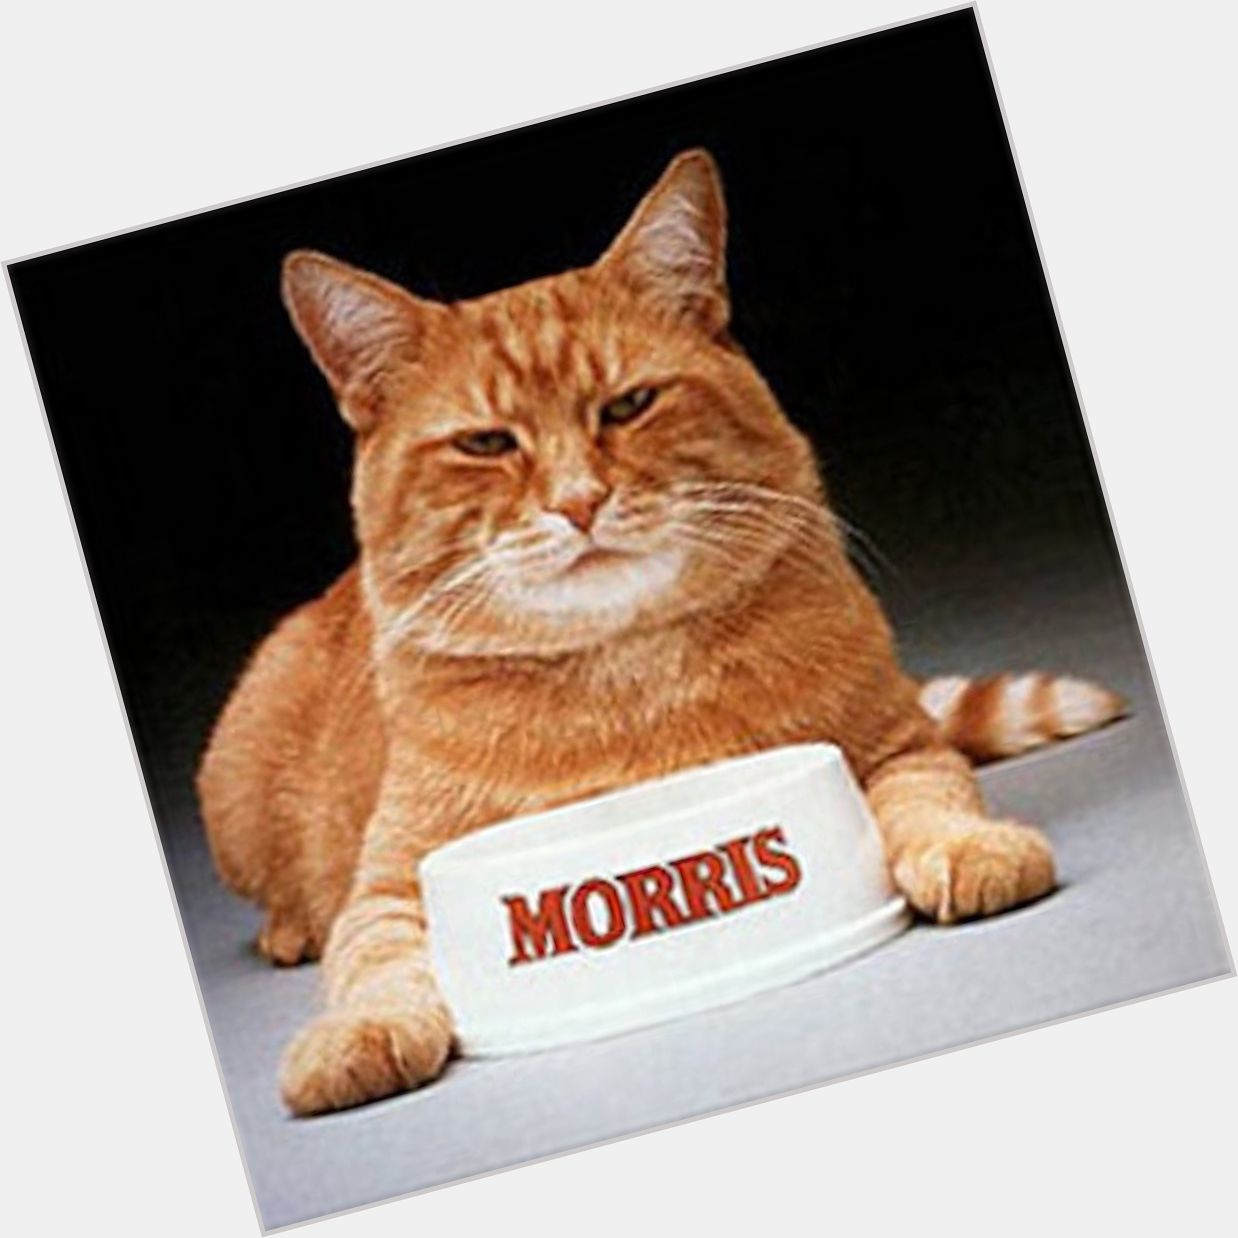 <a href="/hot-men/morris-the-cat/where-dating-news-photos">Morris The Cat</a> Average body,  